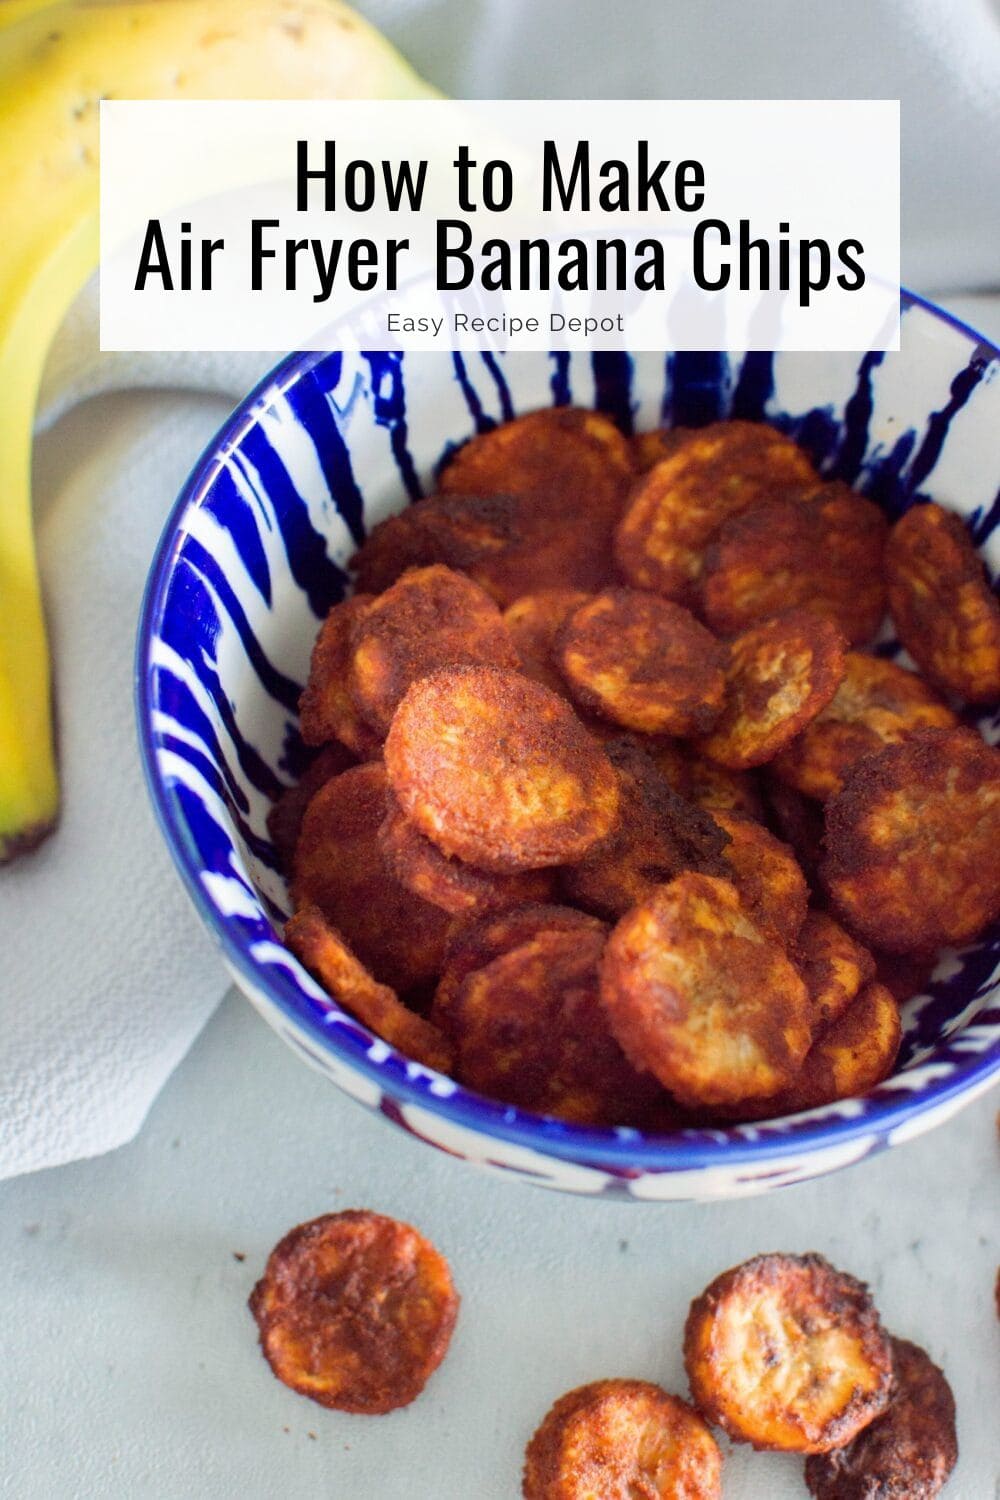 How to make air fryer banana chips.